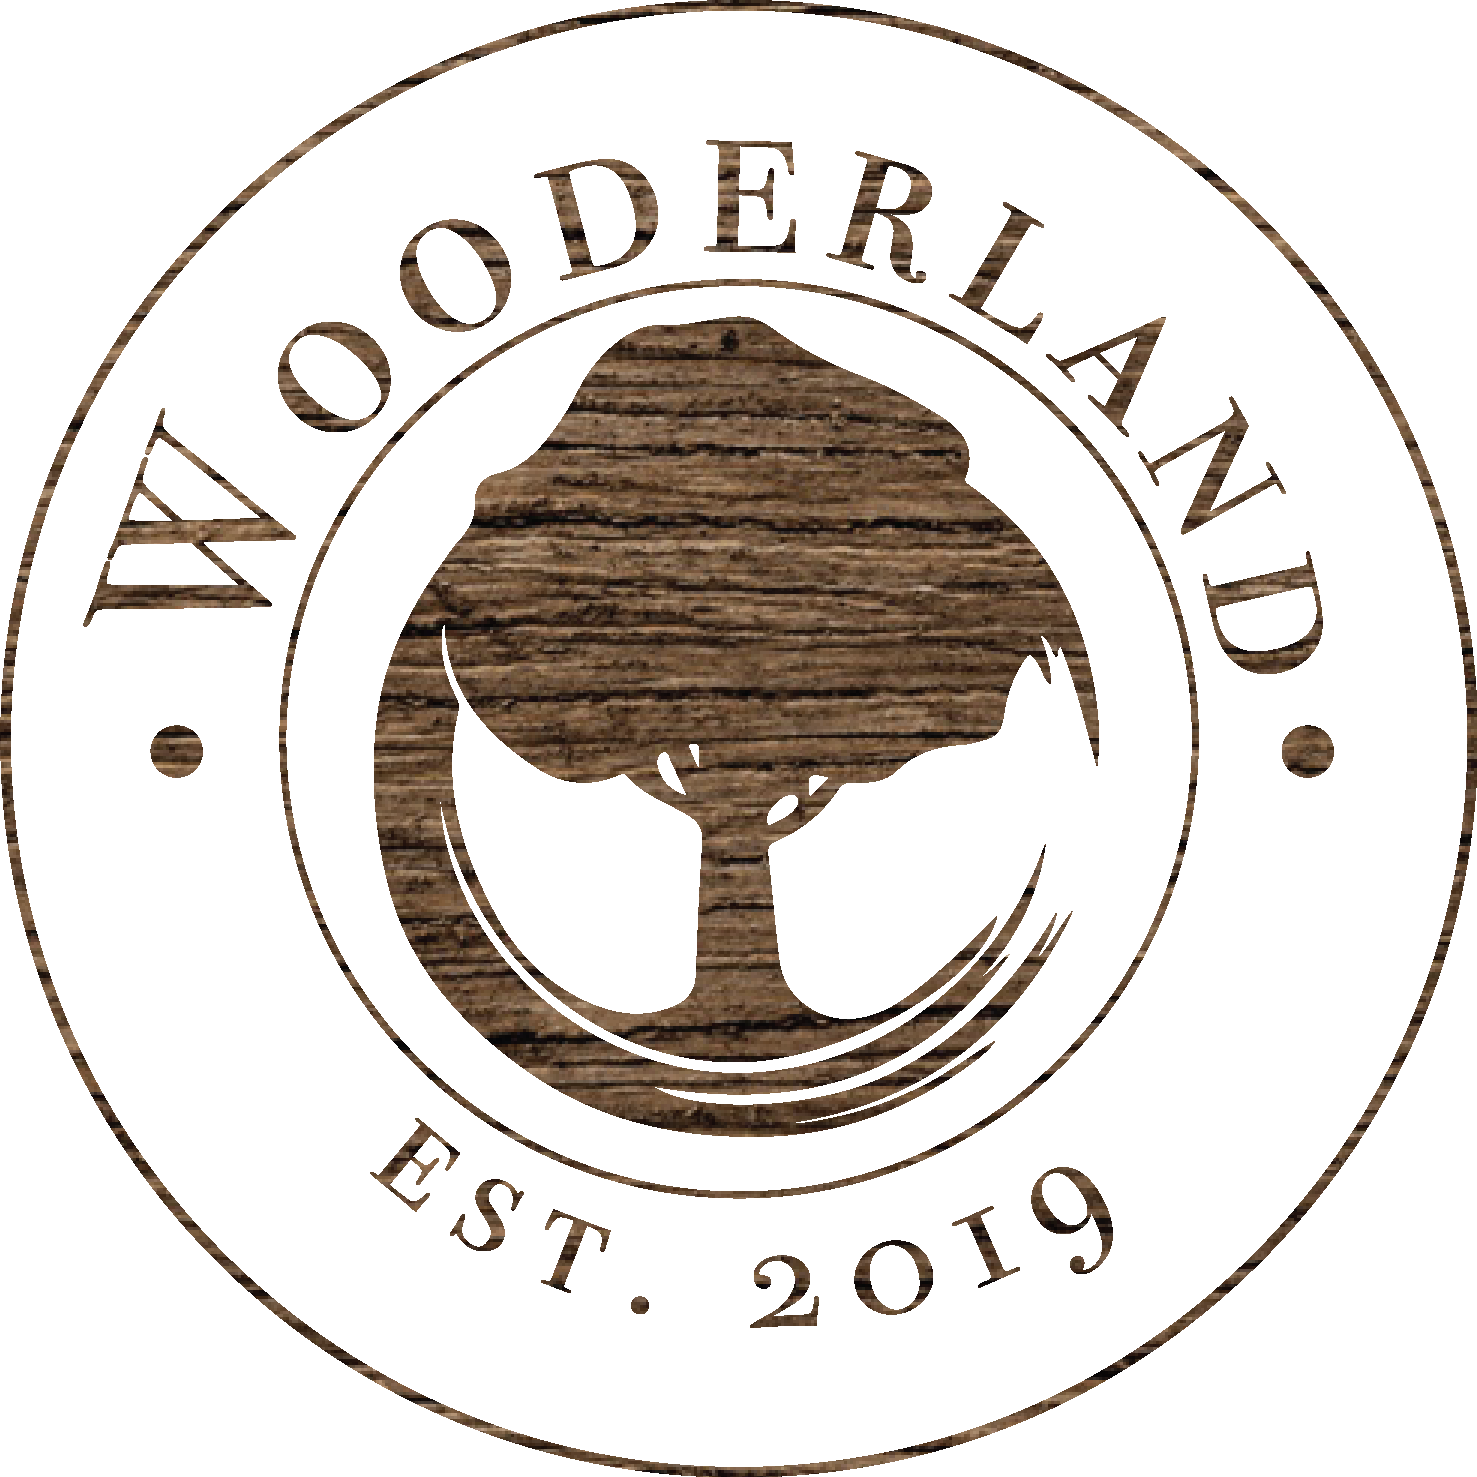 The Wooderland